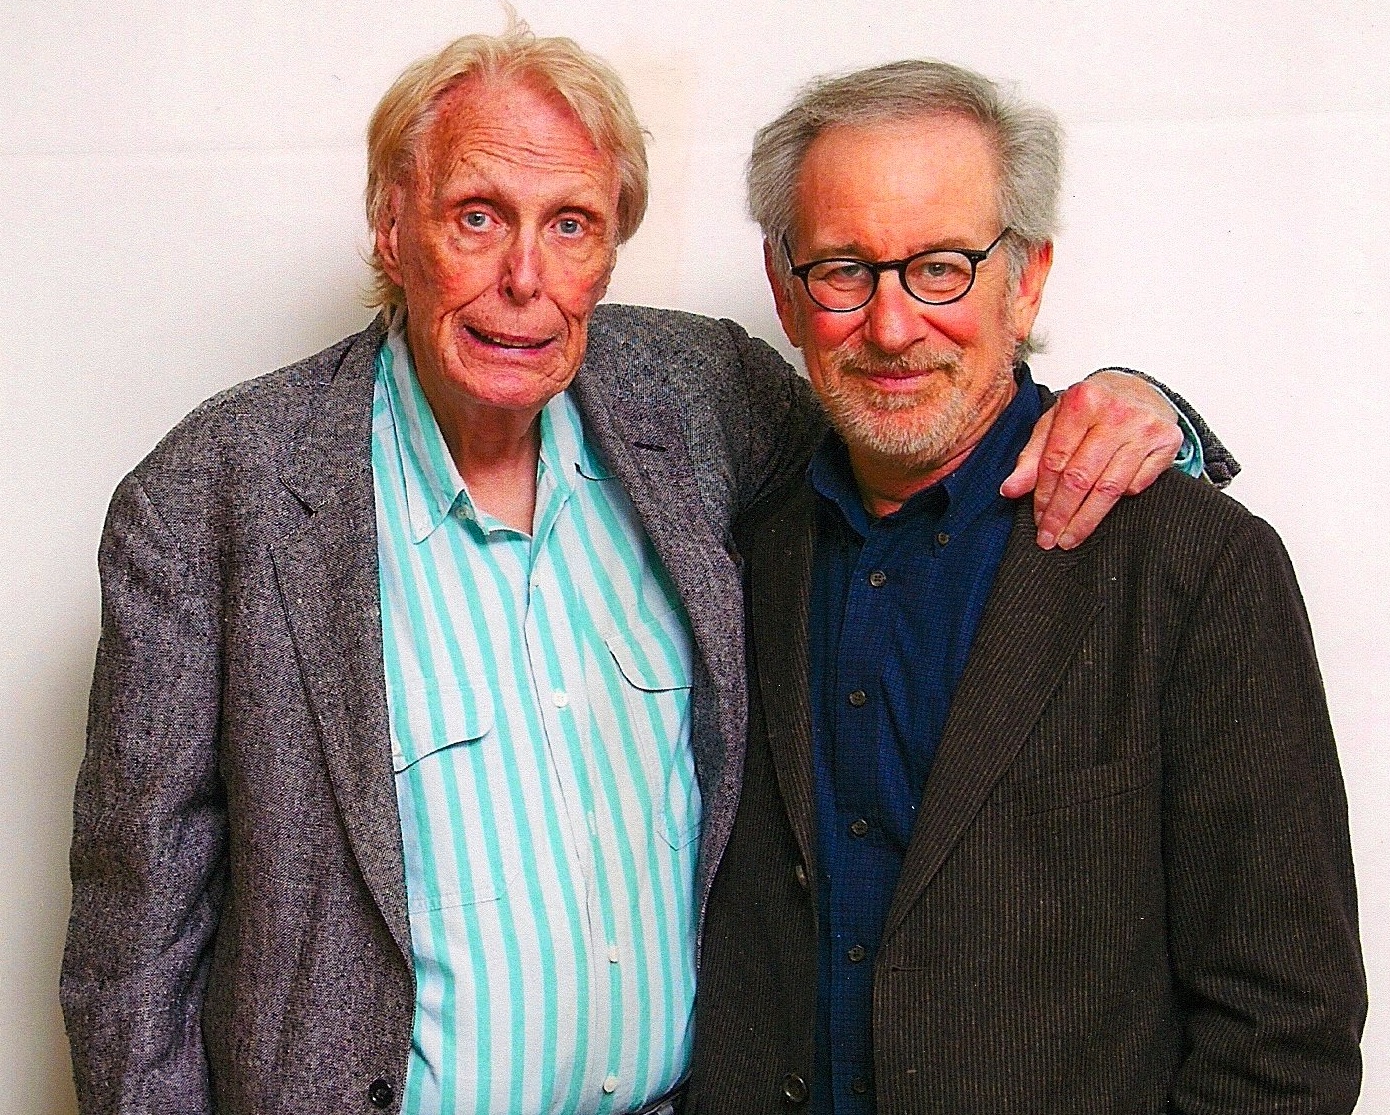 With Steven Spielberg